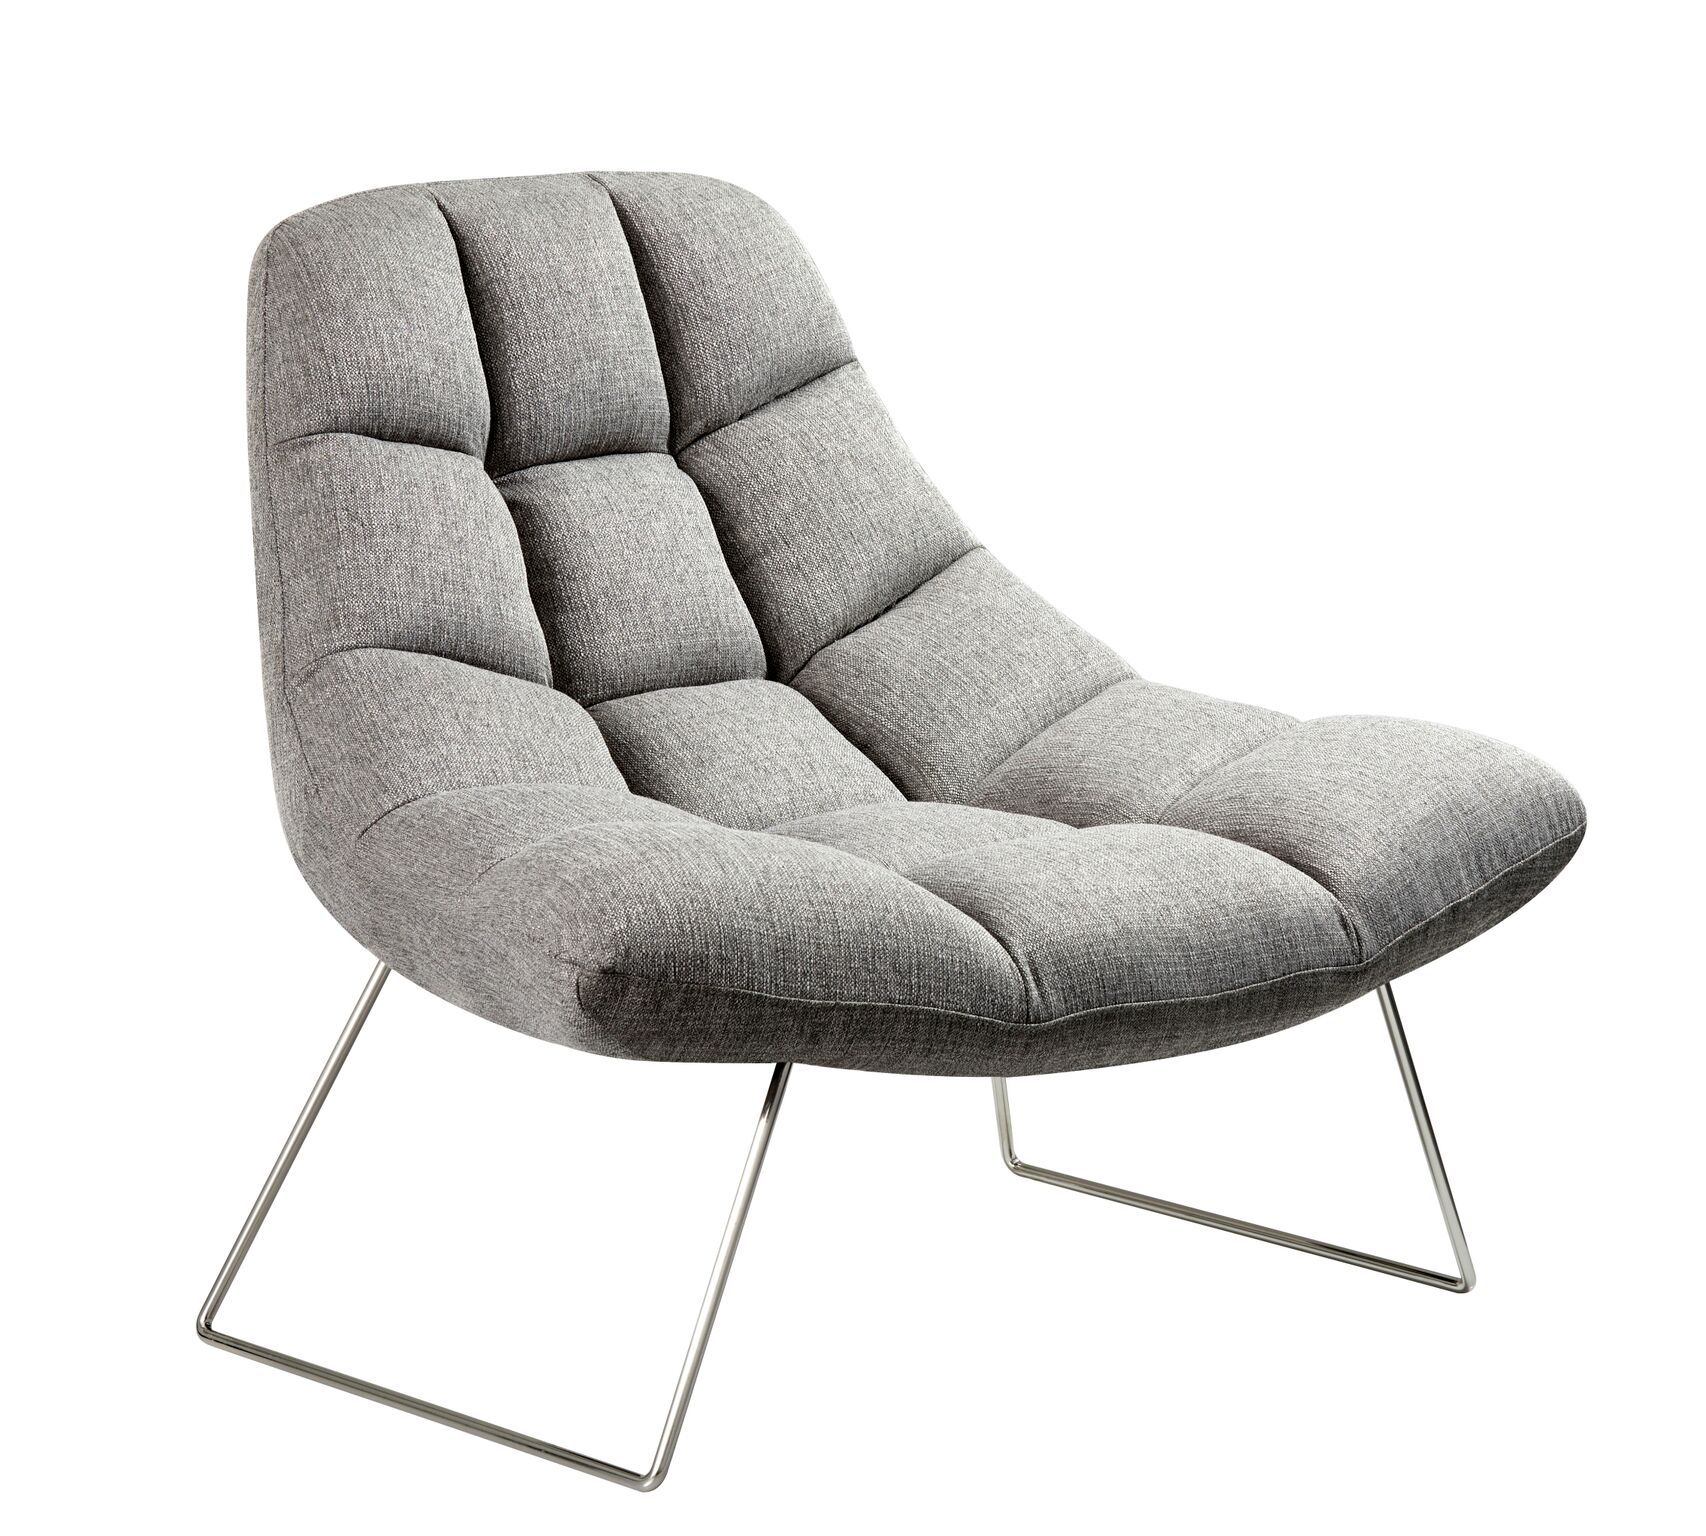 Bartlett Chair - Light Grey Furniture Adesso 